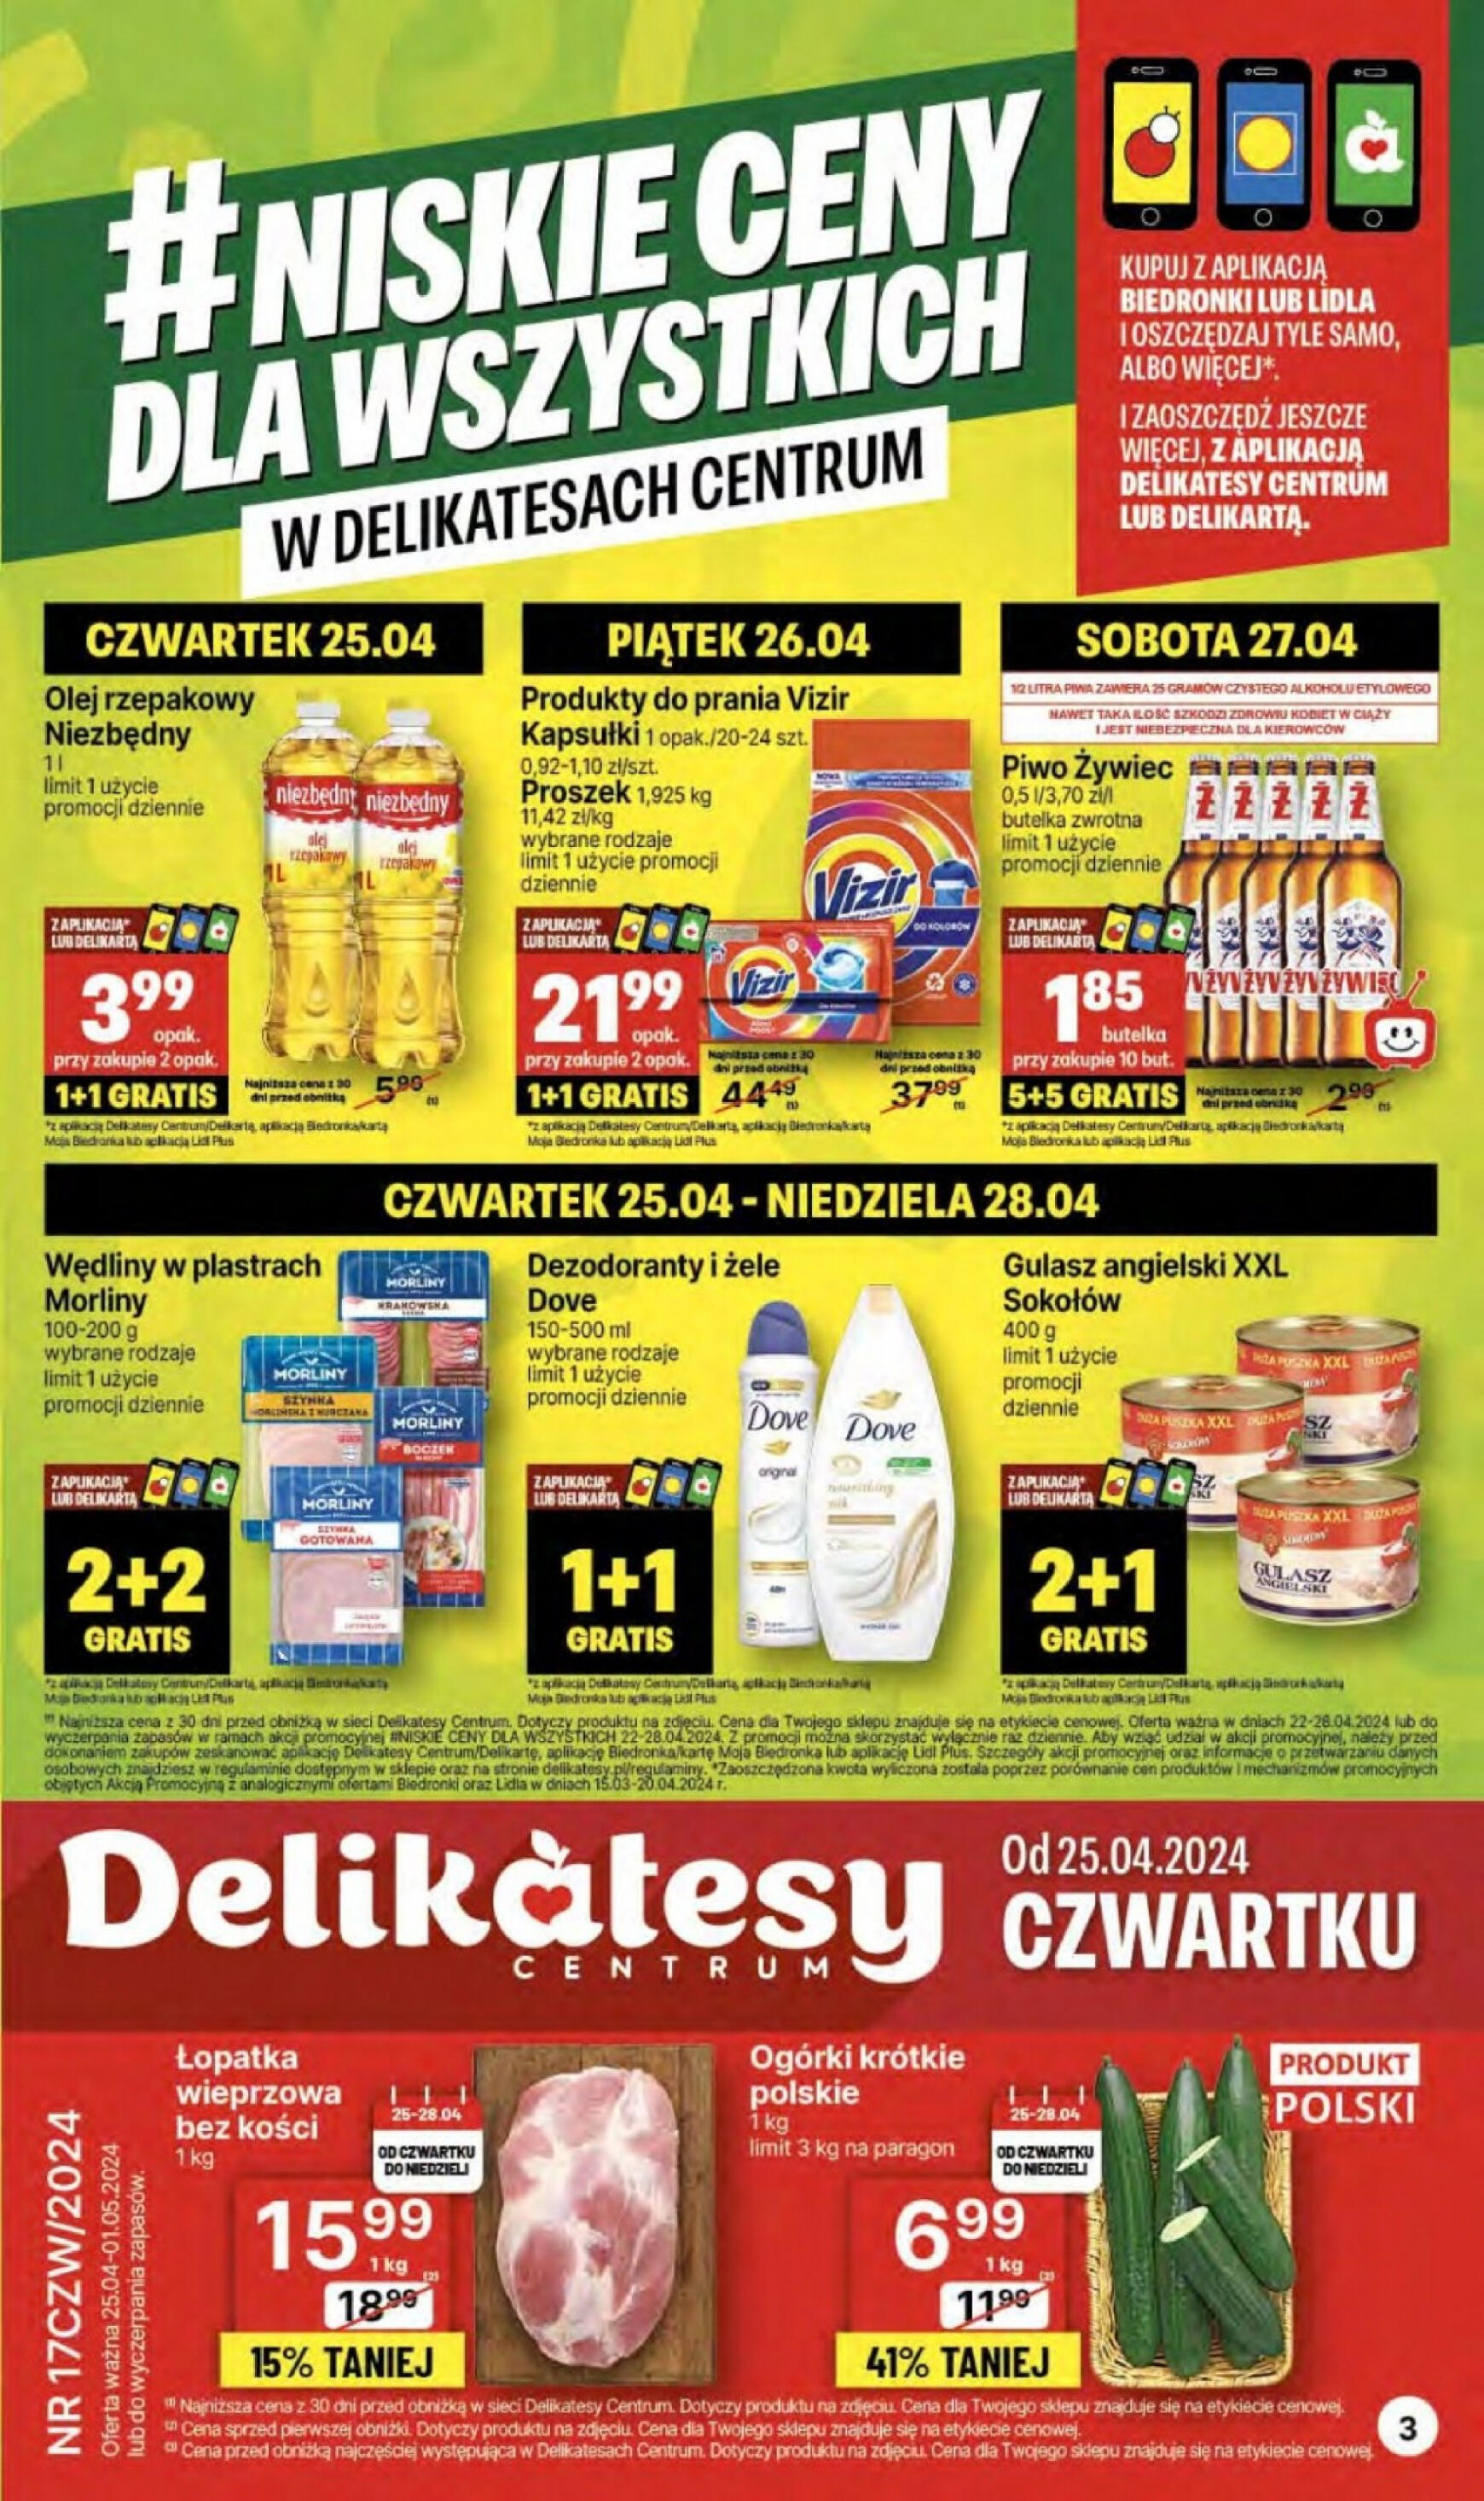 delikatesy-centrum - Delikatesy Centrum gazetka aktualna ważna od 25.04. - 01.05. - page: 3